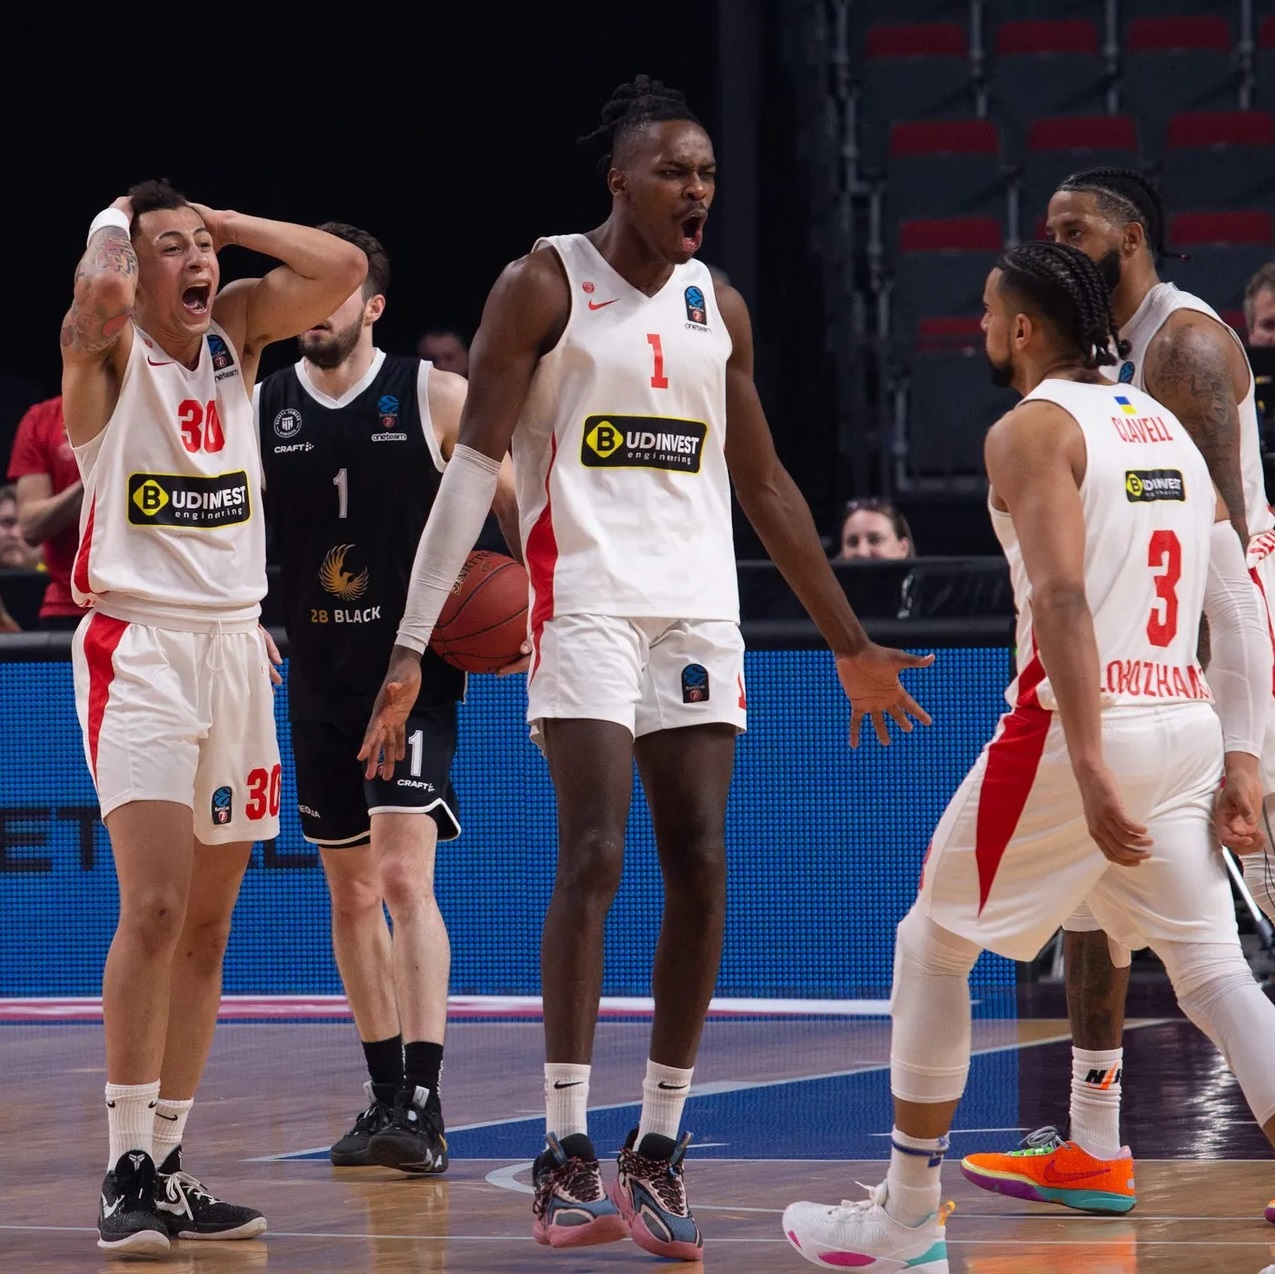 Giannis, Greece Hand Len, Ukraine First EuroBasket Loss - Sactown Sports